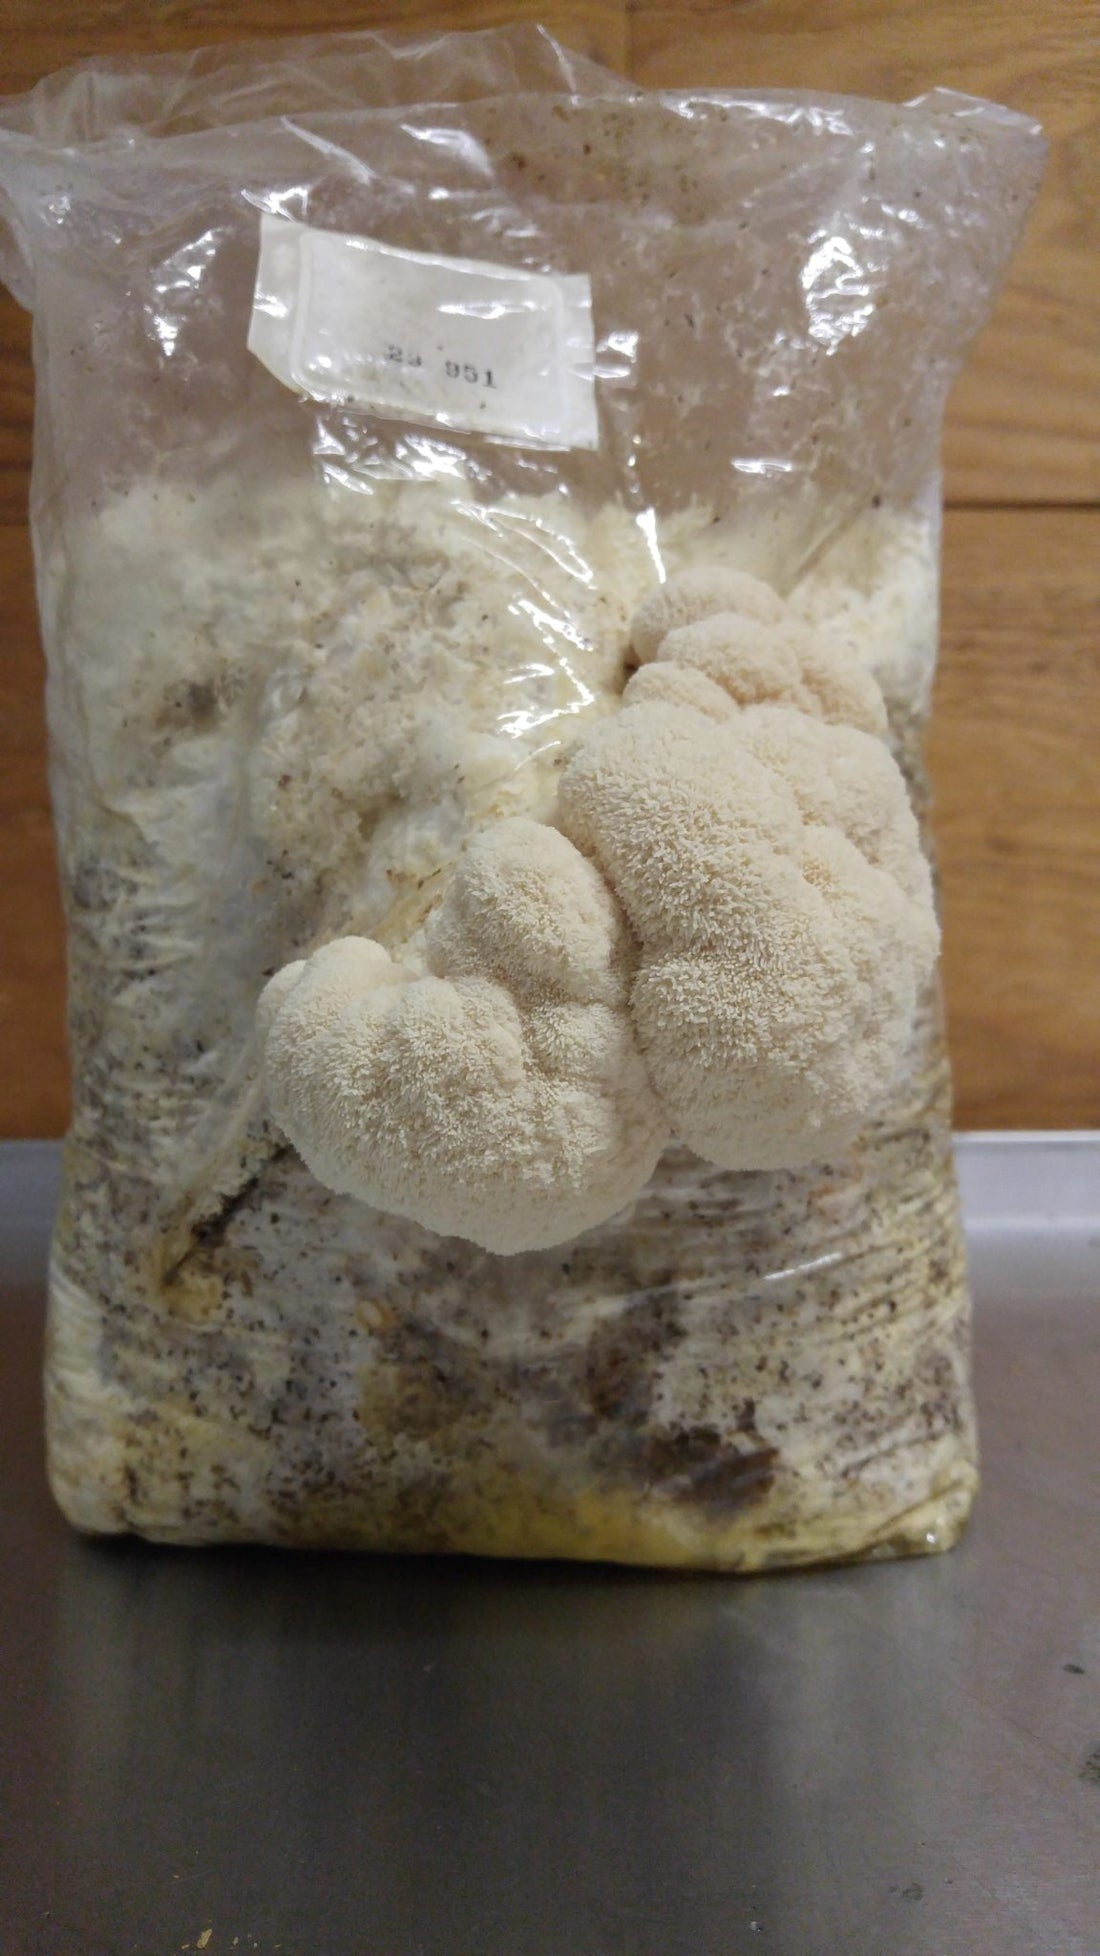 How to grow mushrooms indoors: How to grow mushrooms inside